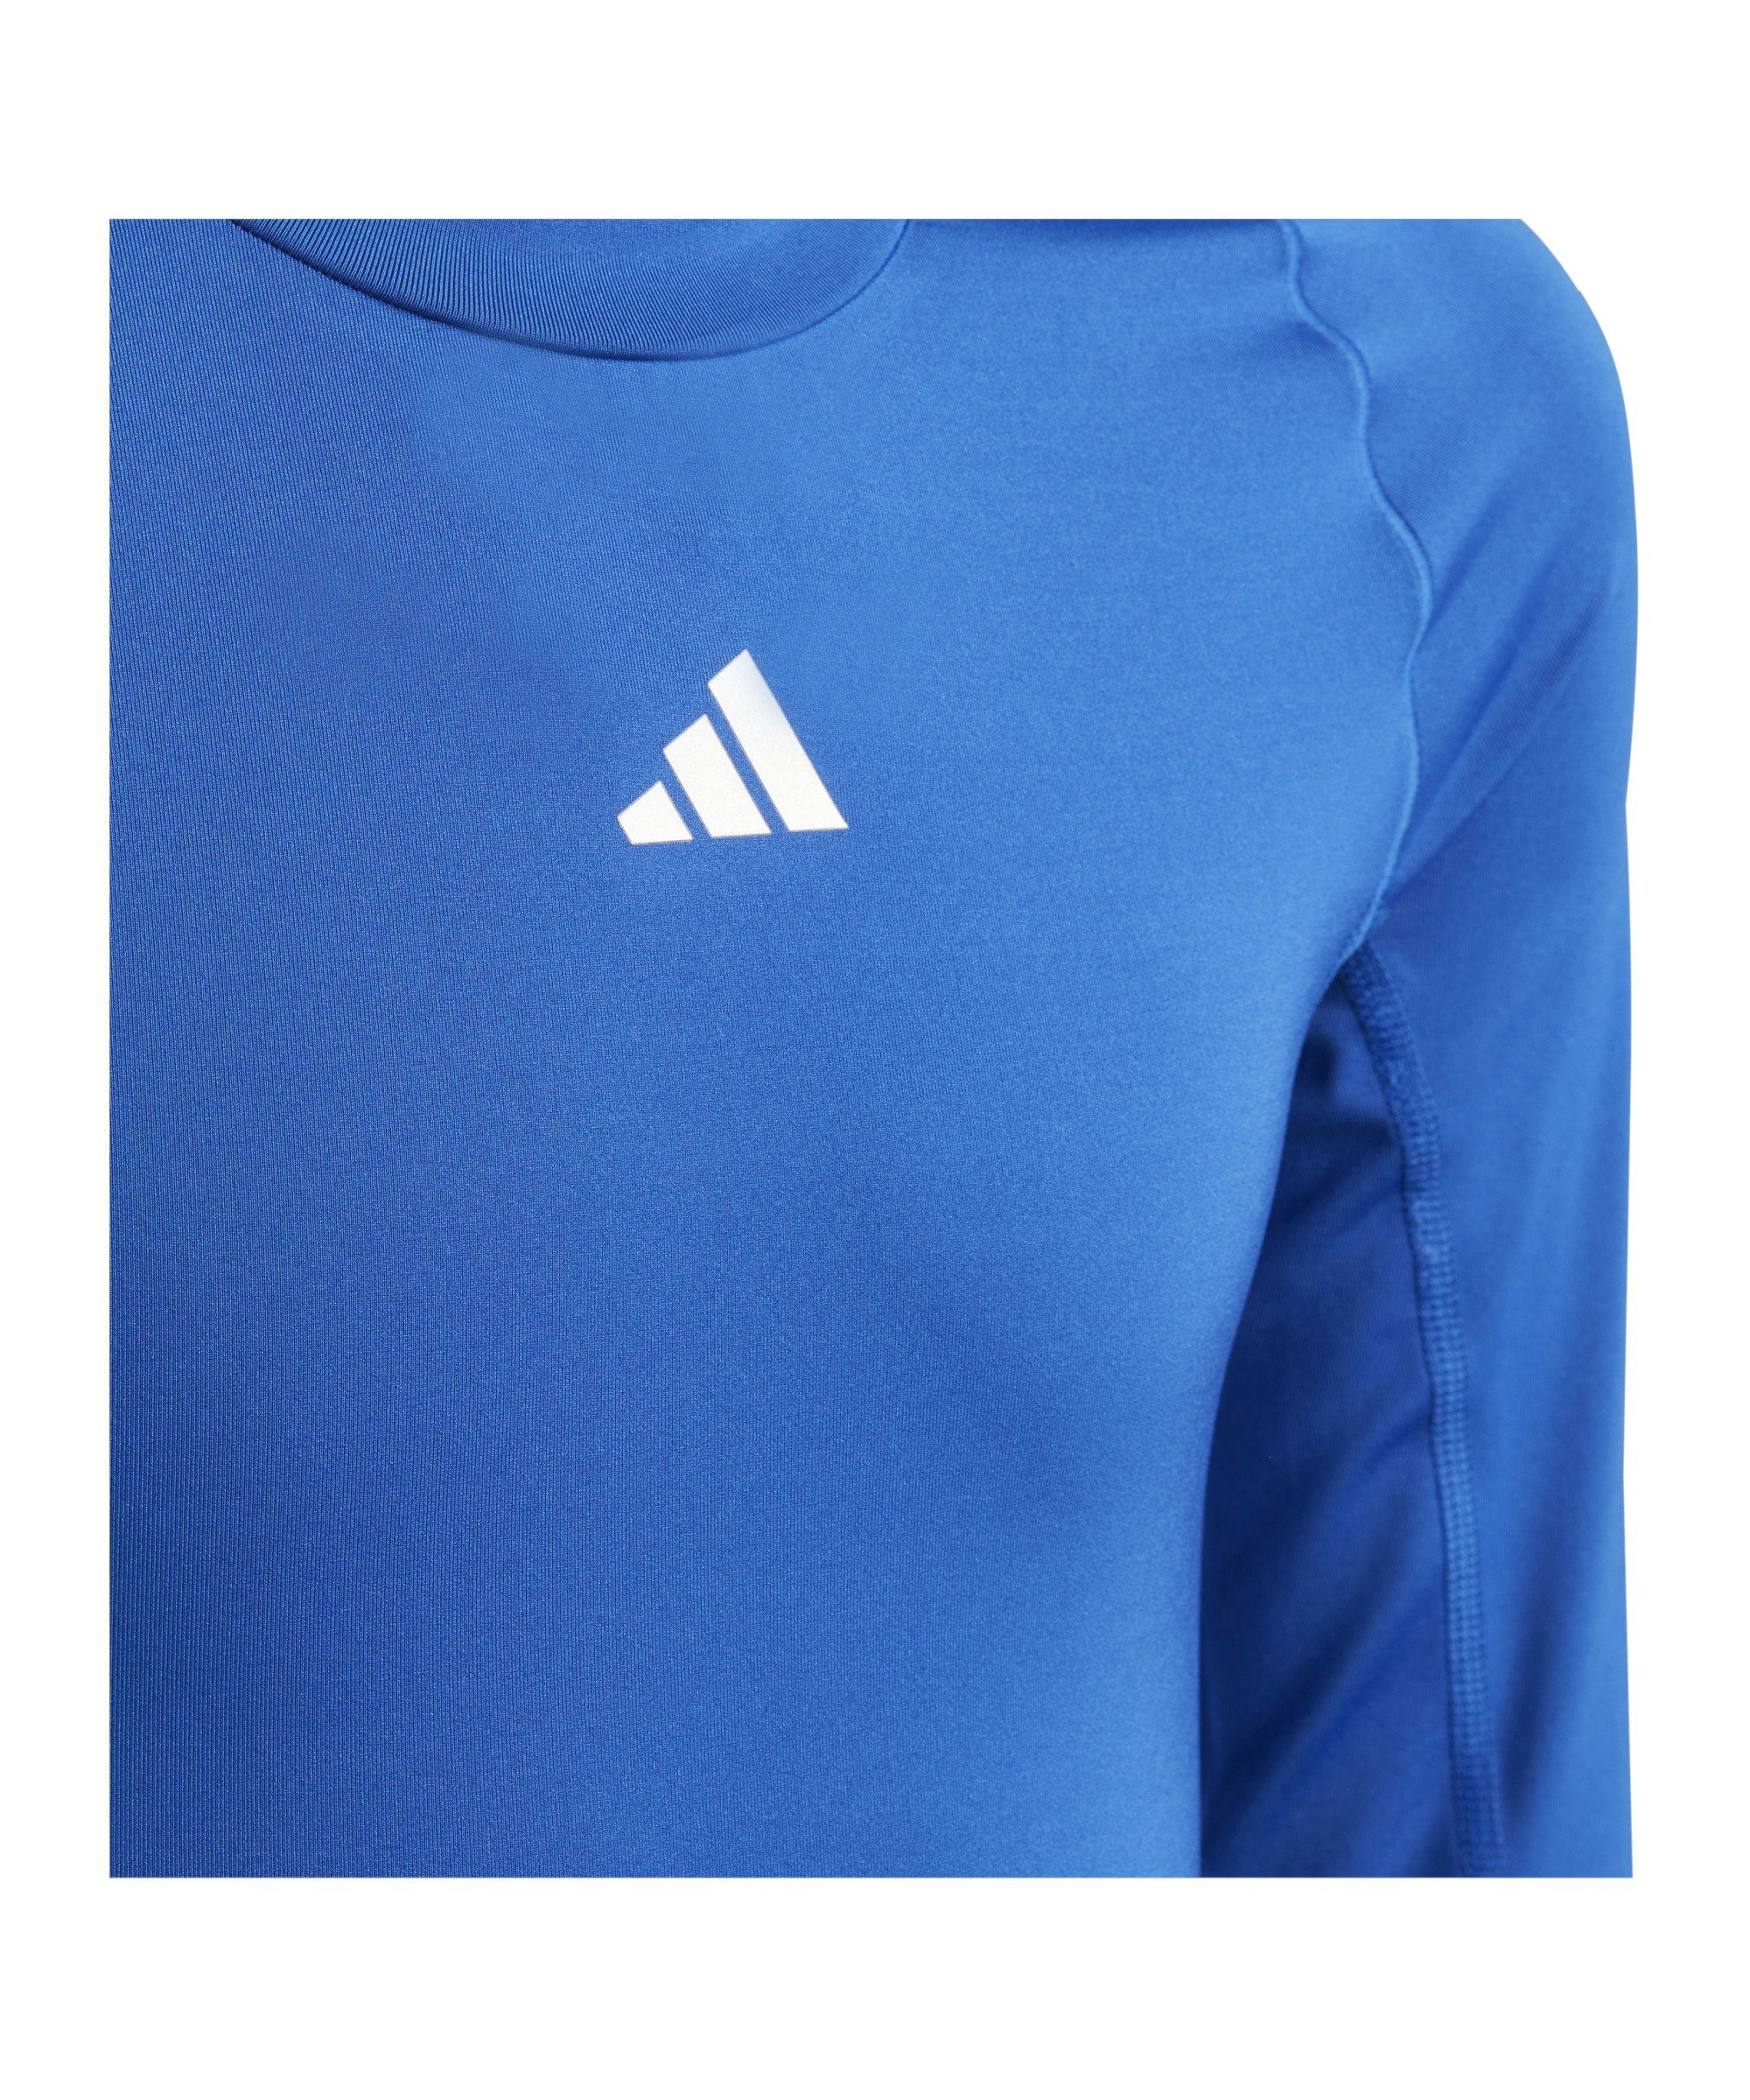 Sweatshirt Techfit adidas Dunkel Sweatshirt blau Performance